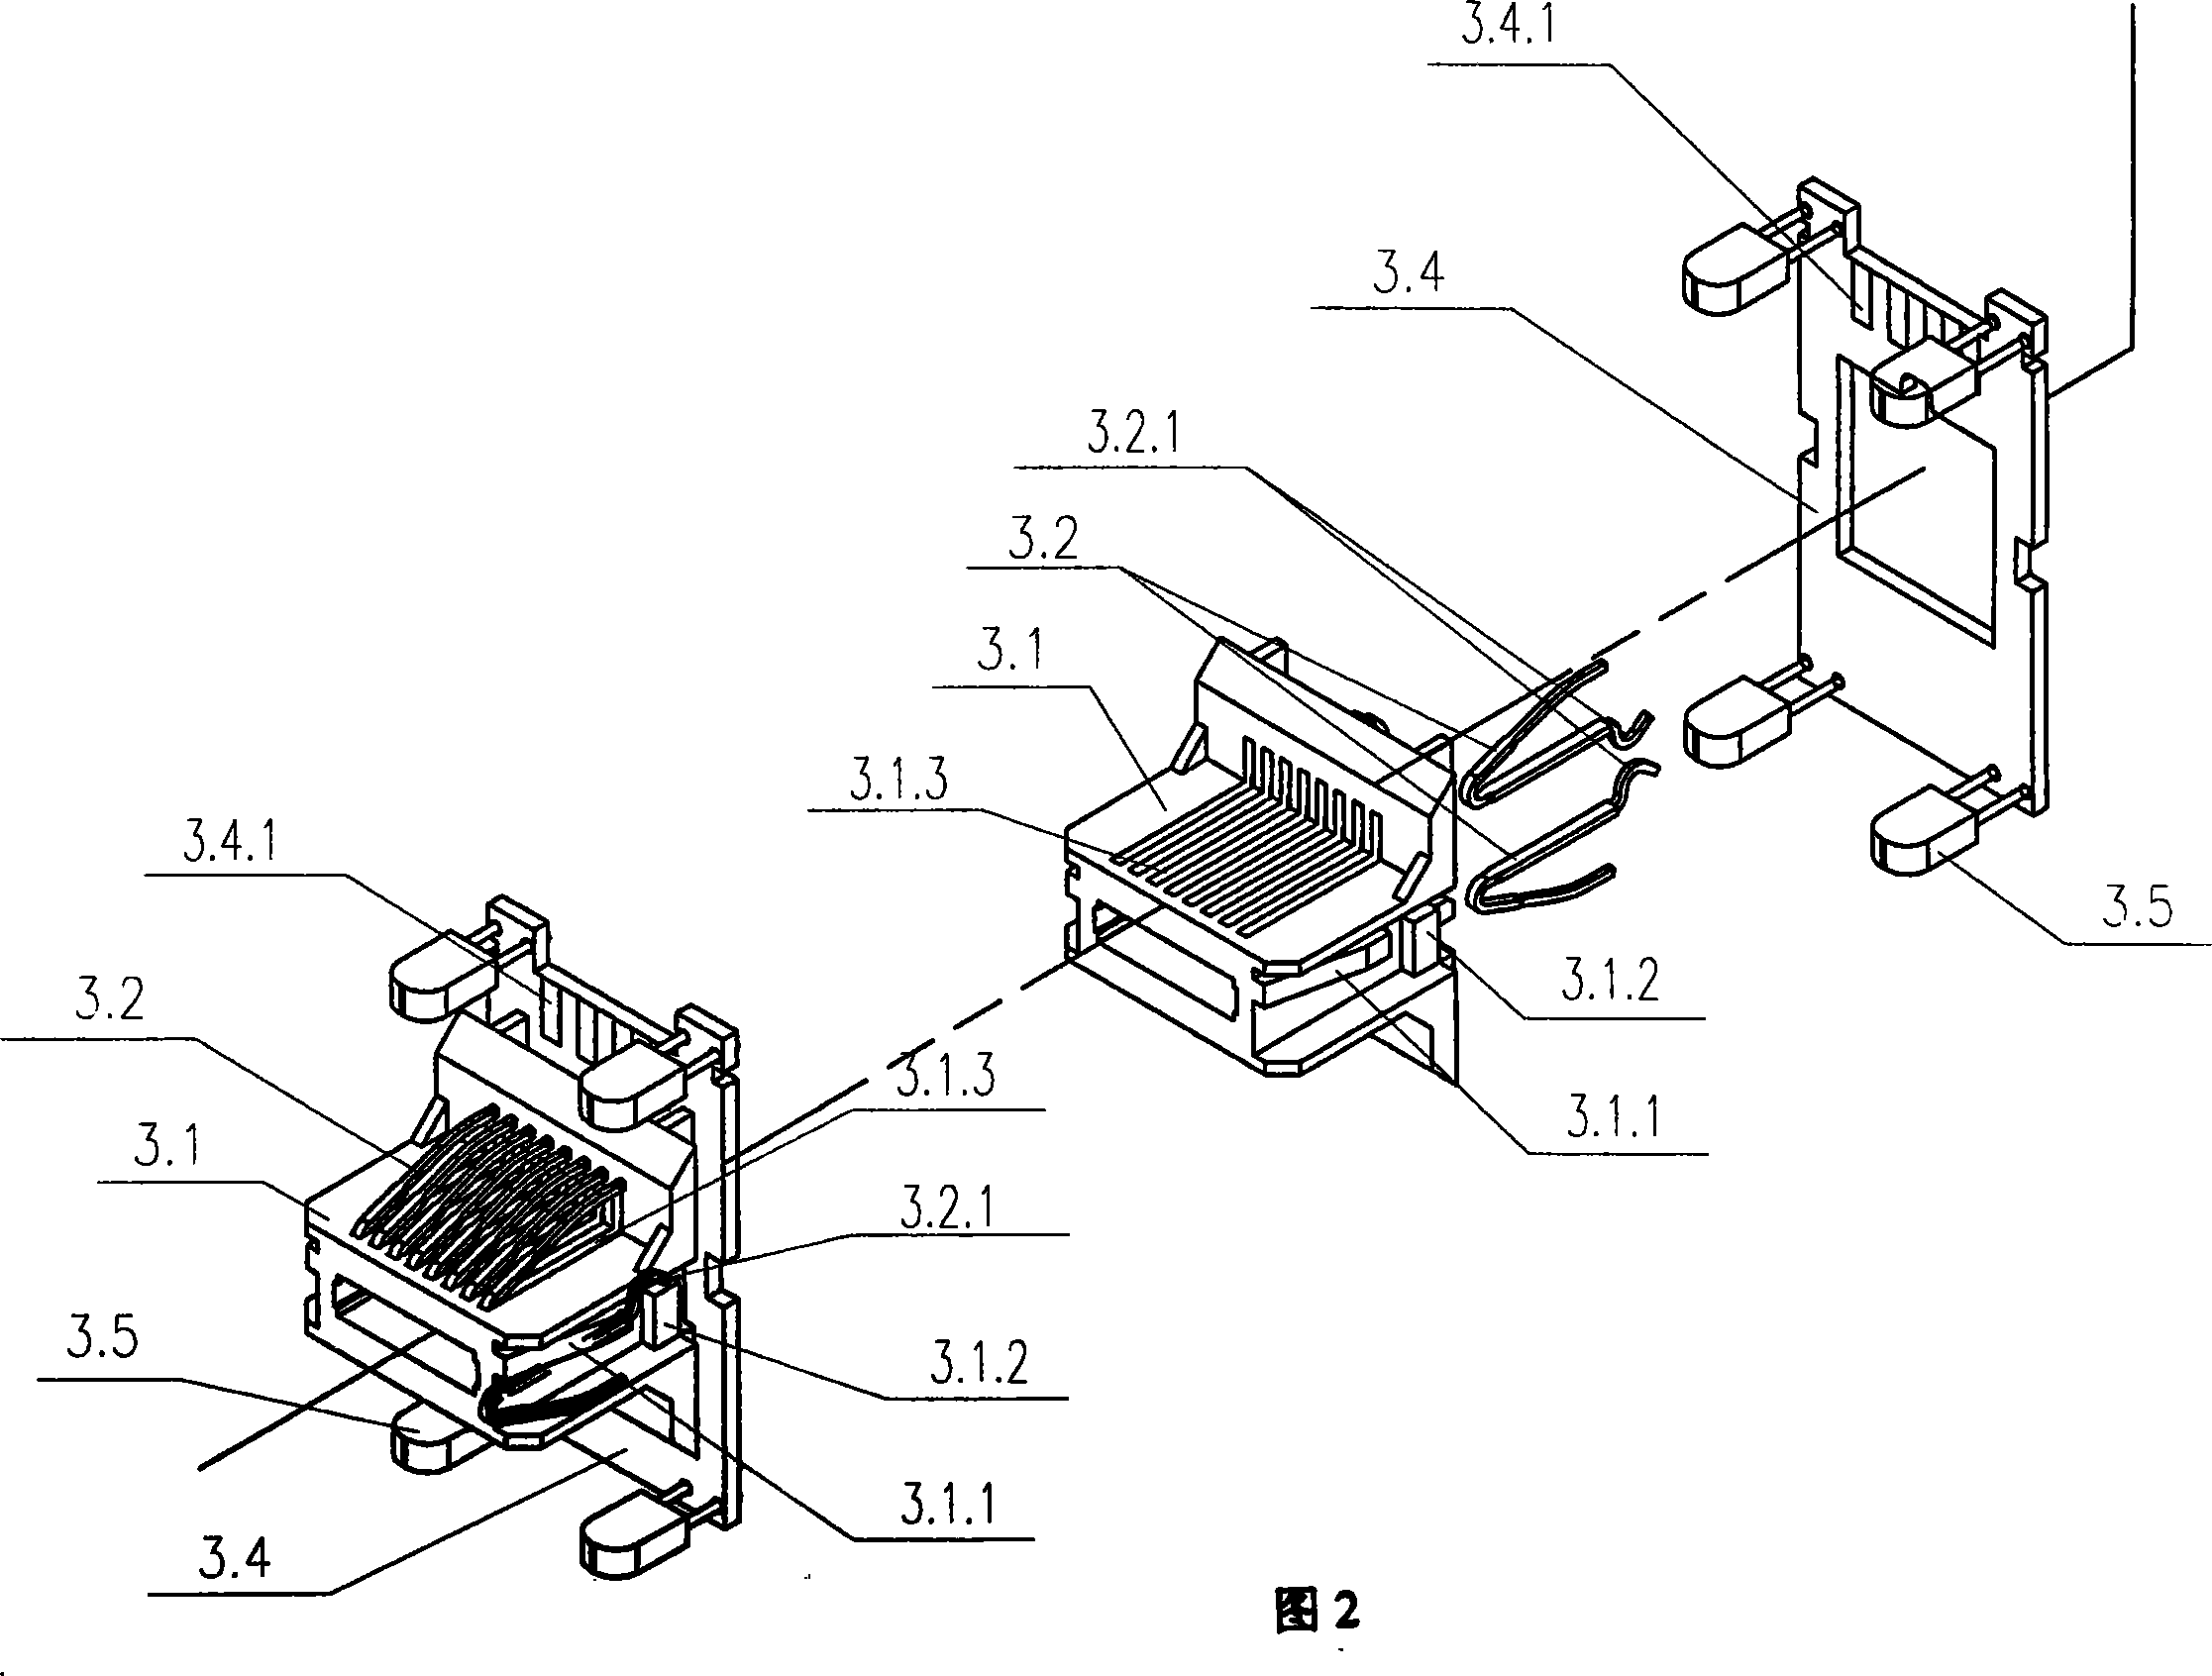 Novel multi-function RJ45 connector structure